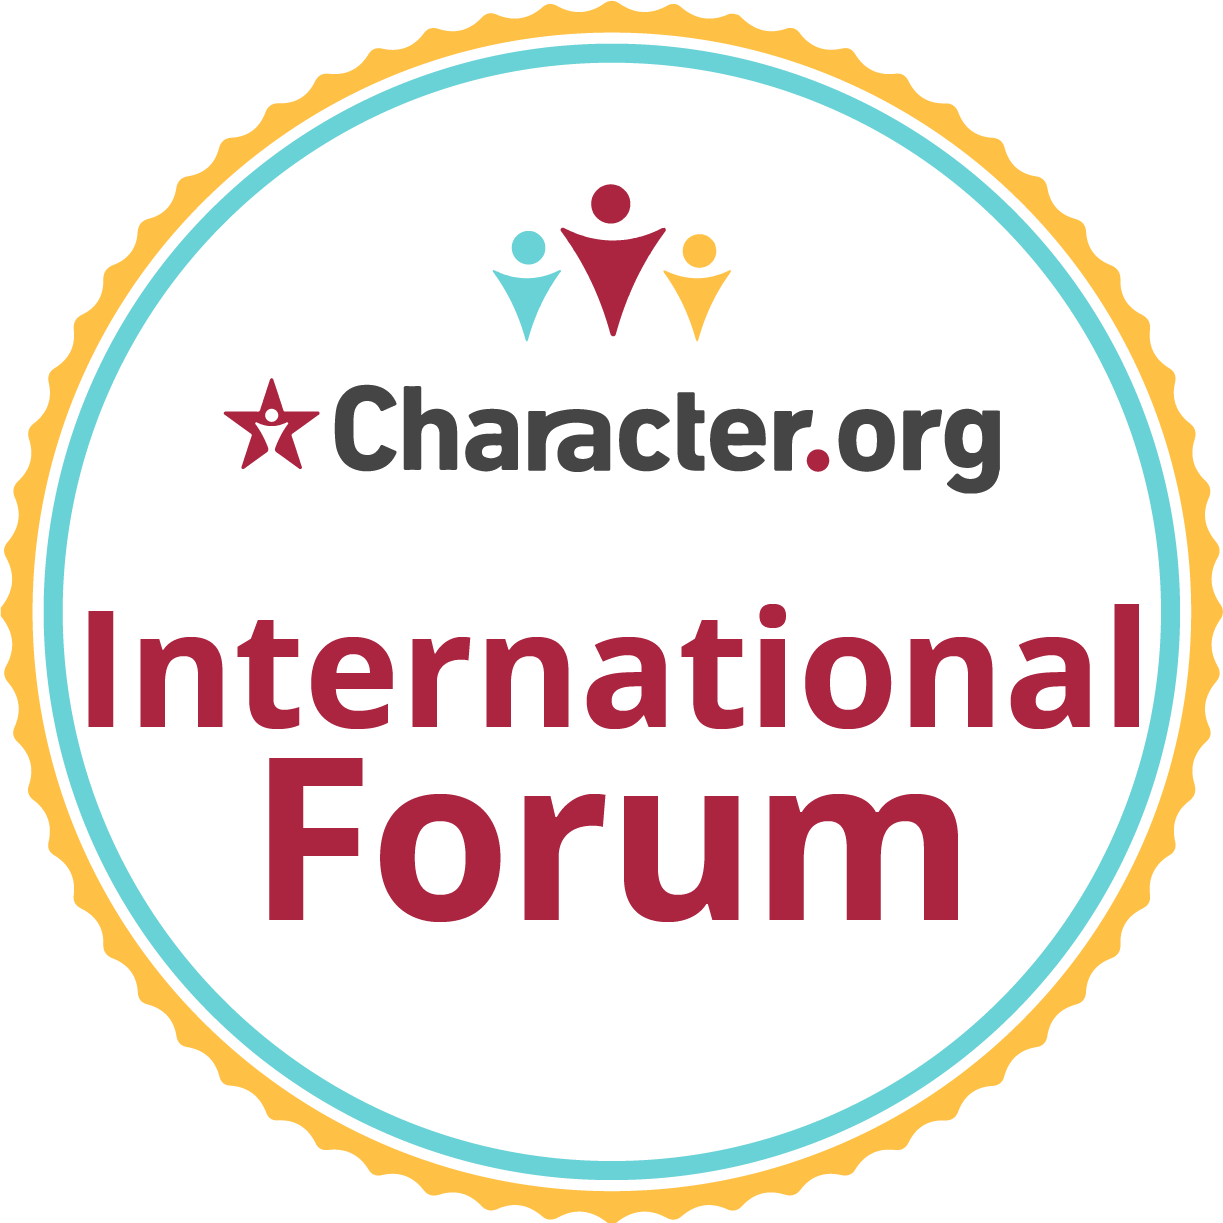 International Forum